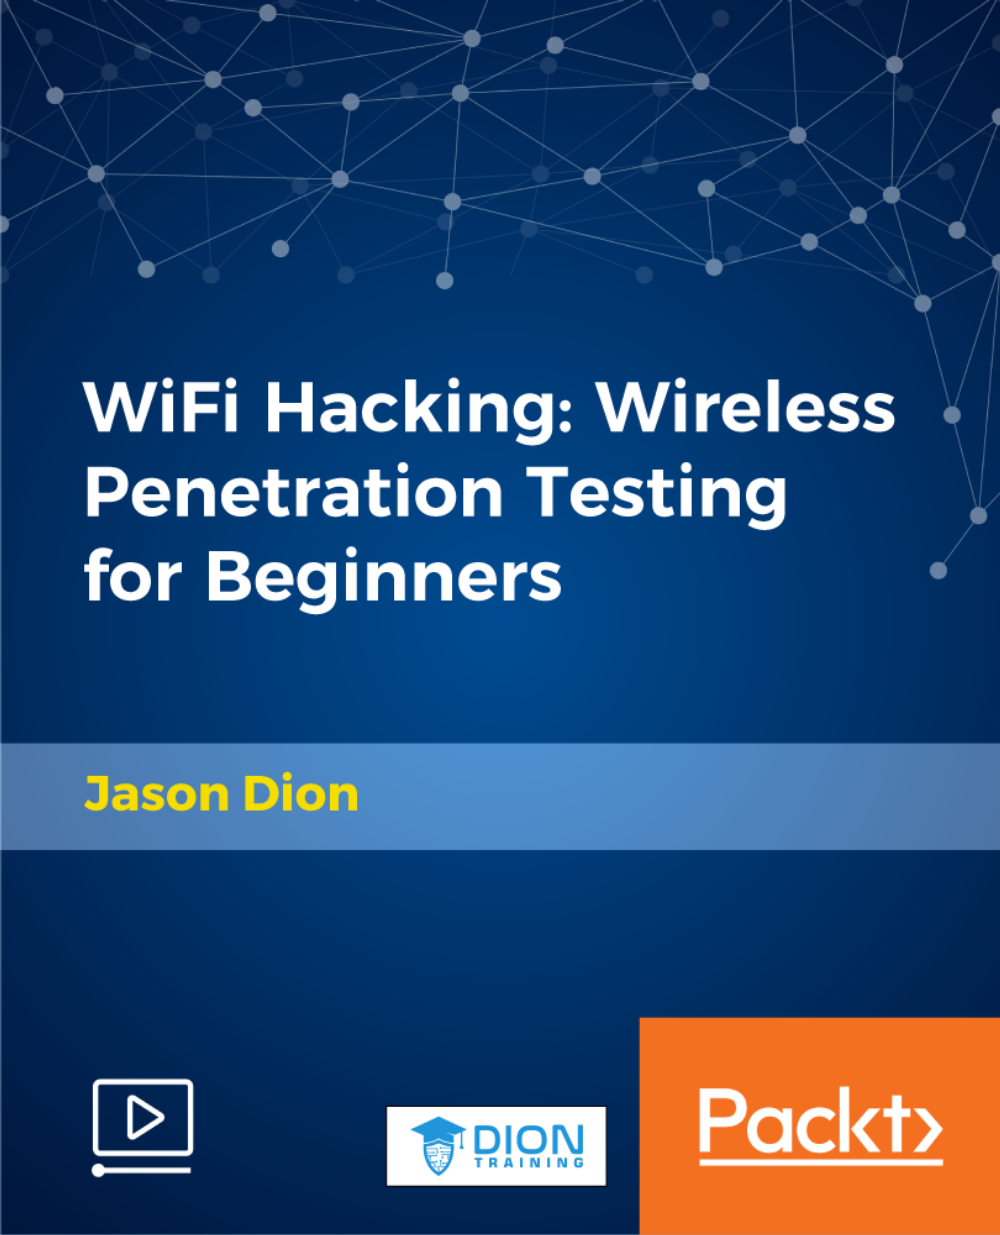 WiFi Hacking: Wireless Penetration Testing for Beginners